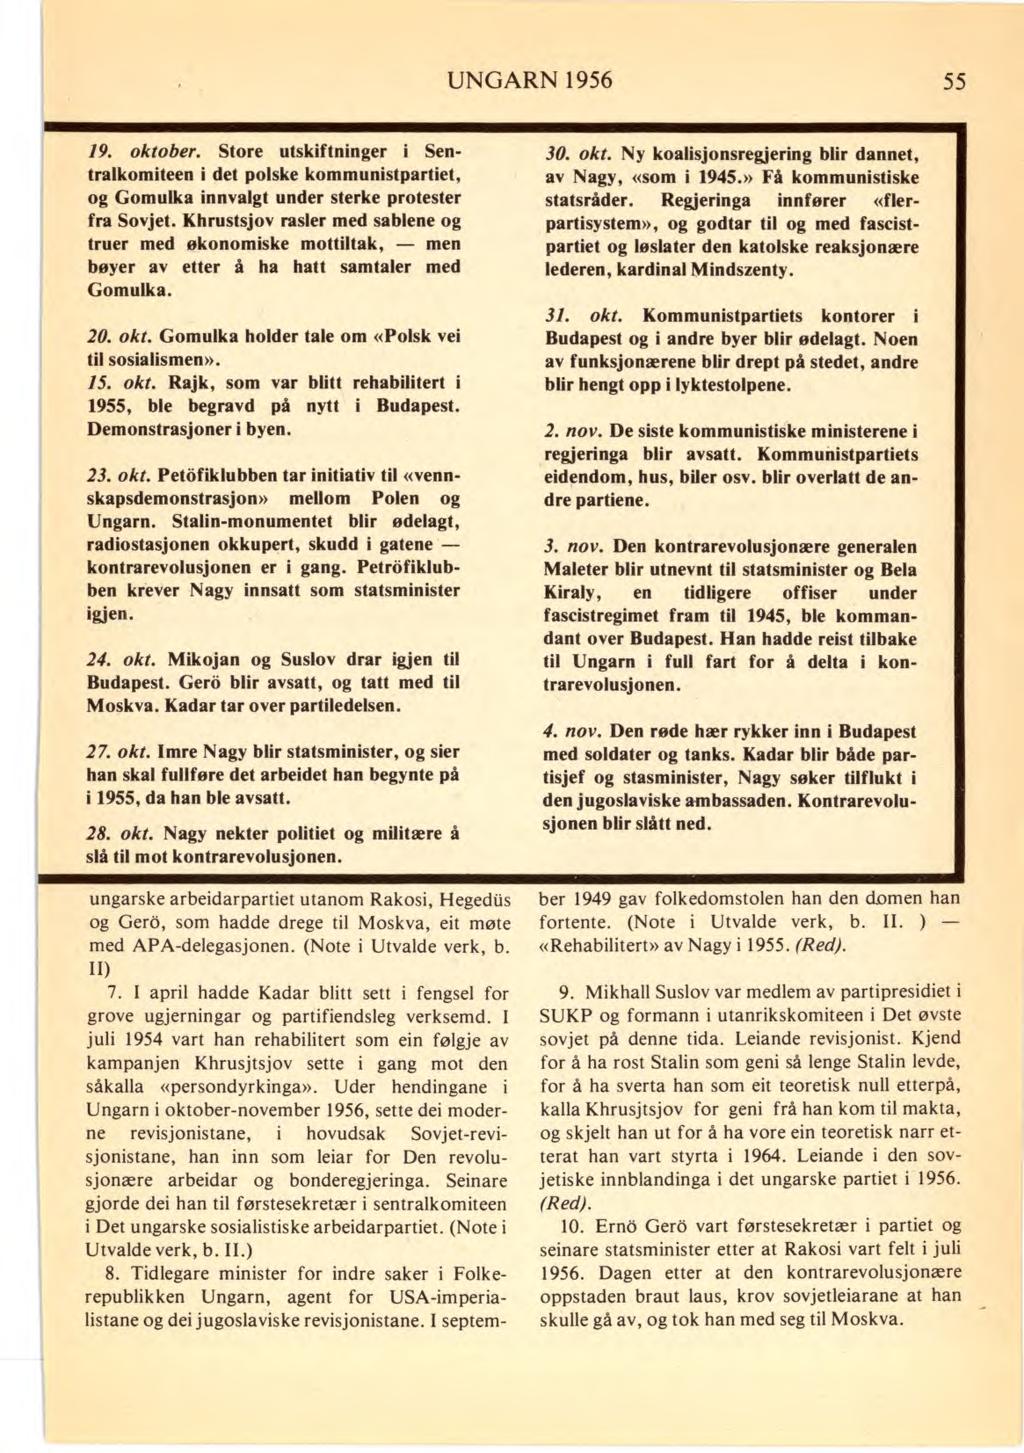 UNGARN 1956 55 oktober. Store utskiftninger i Sentralkomiteen i det polske kommunistpartiet, og Gomulka innvalgt under sterke protester fra Sovjet.